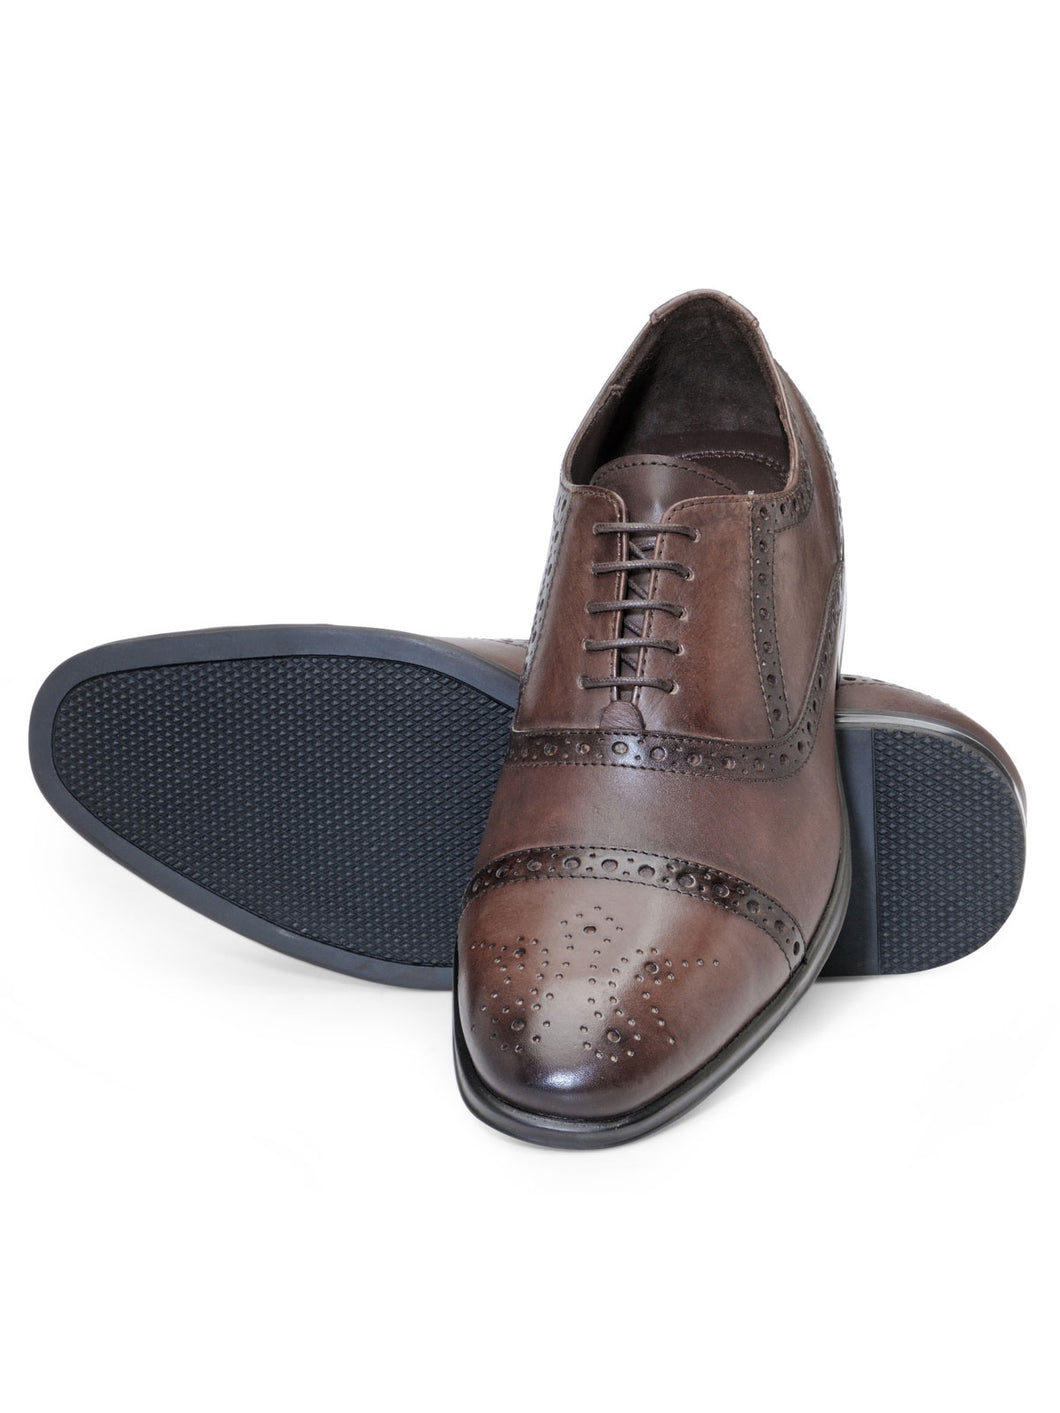 Teakwood Leather Men's Brown Oxford/Brogue Shoes